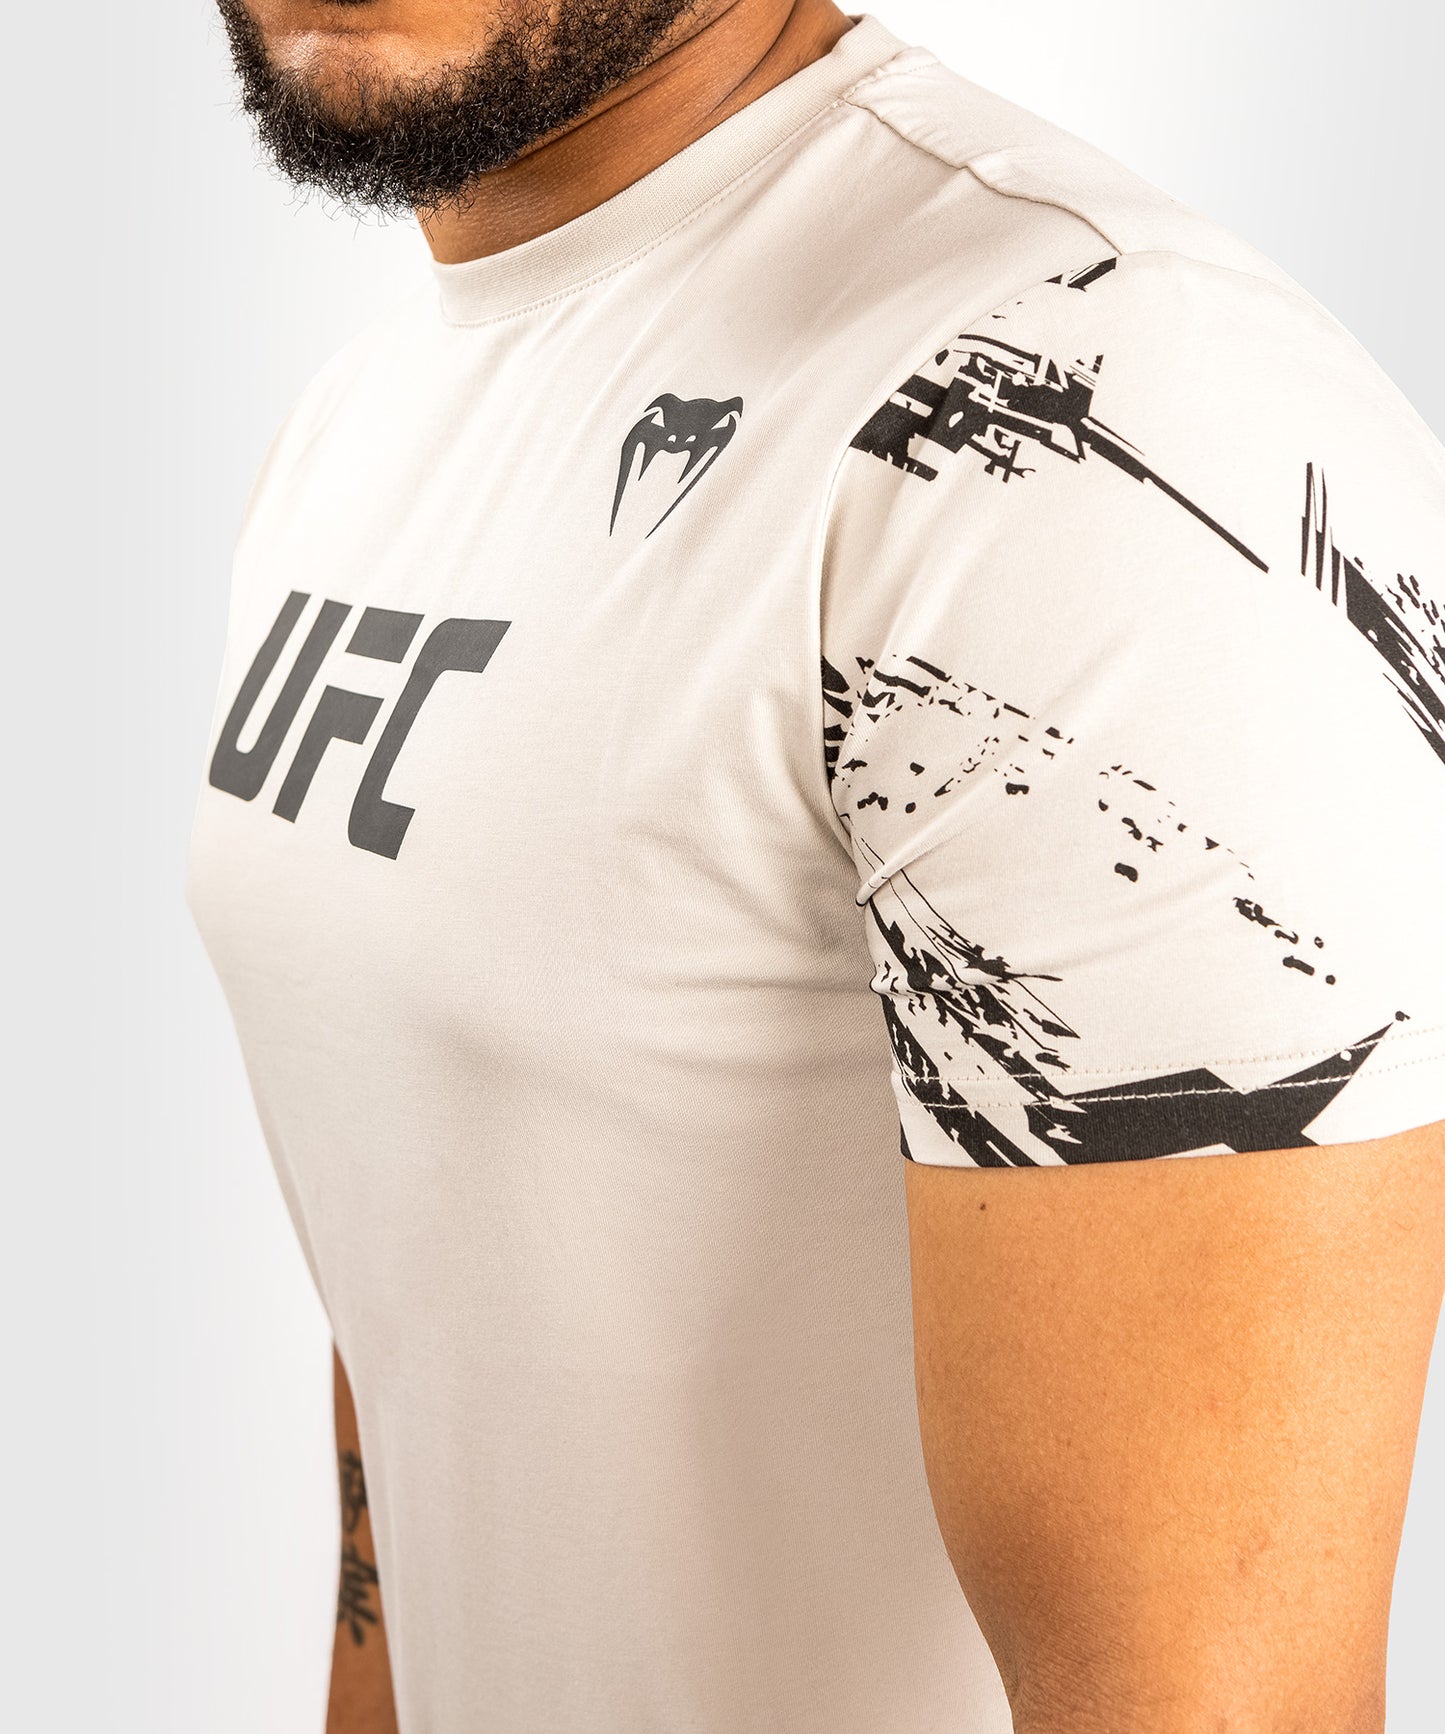 Venum UFC Authentic Fight Week Men Performance Short Sleeve T-shirt Verde